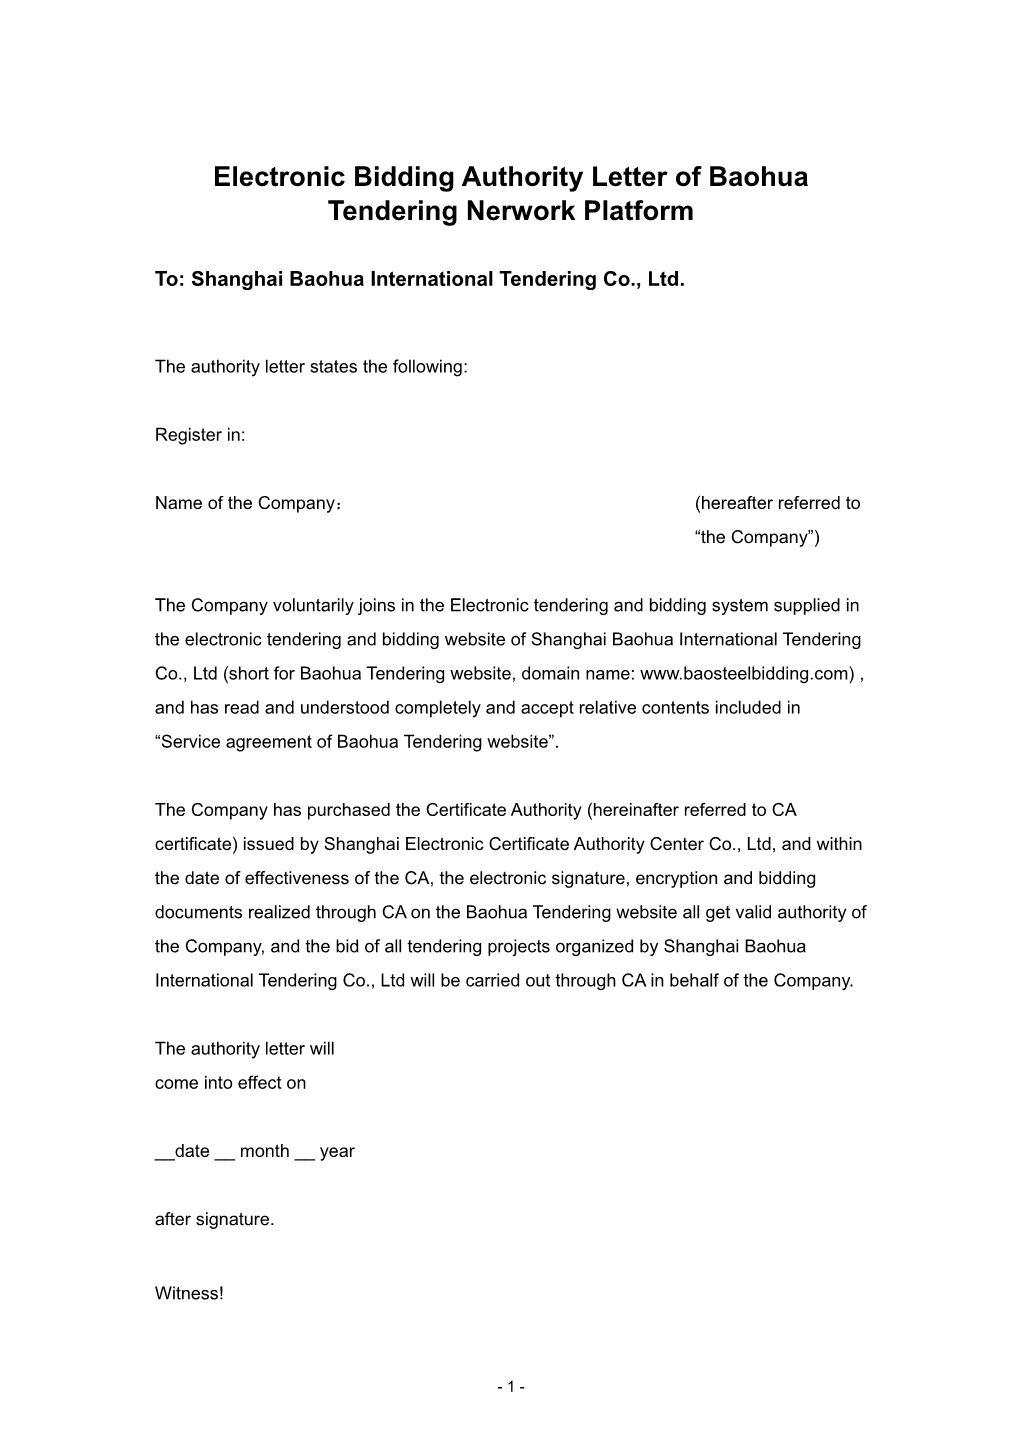 Electronic Bidding Authority Letter of Baohua Tendering Website